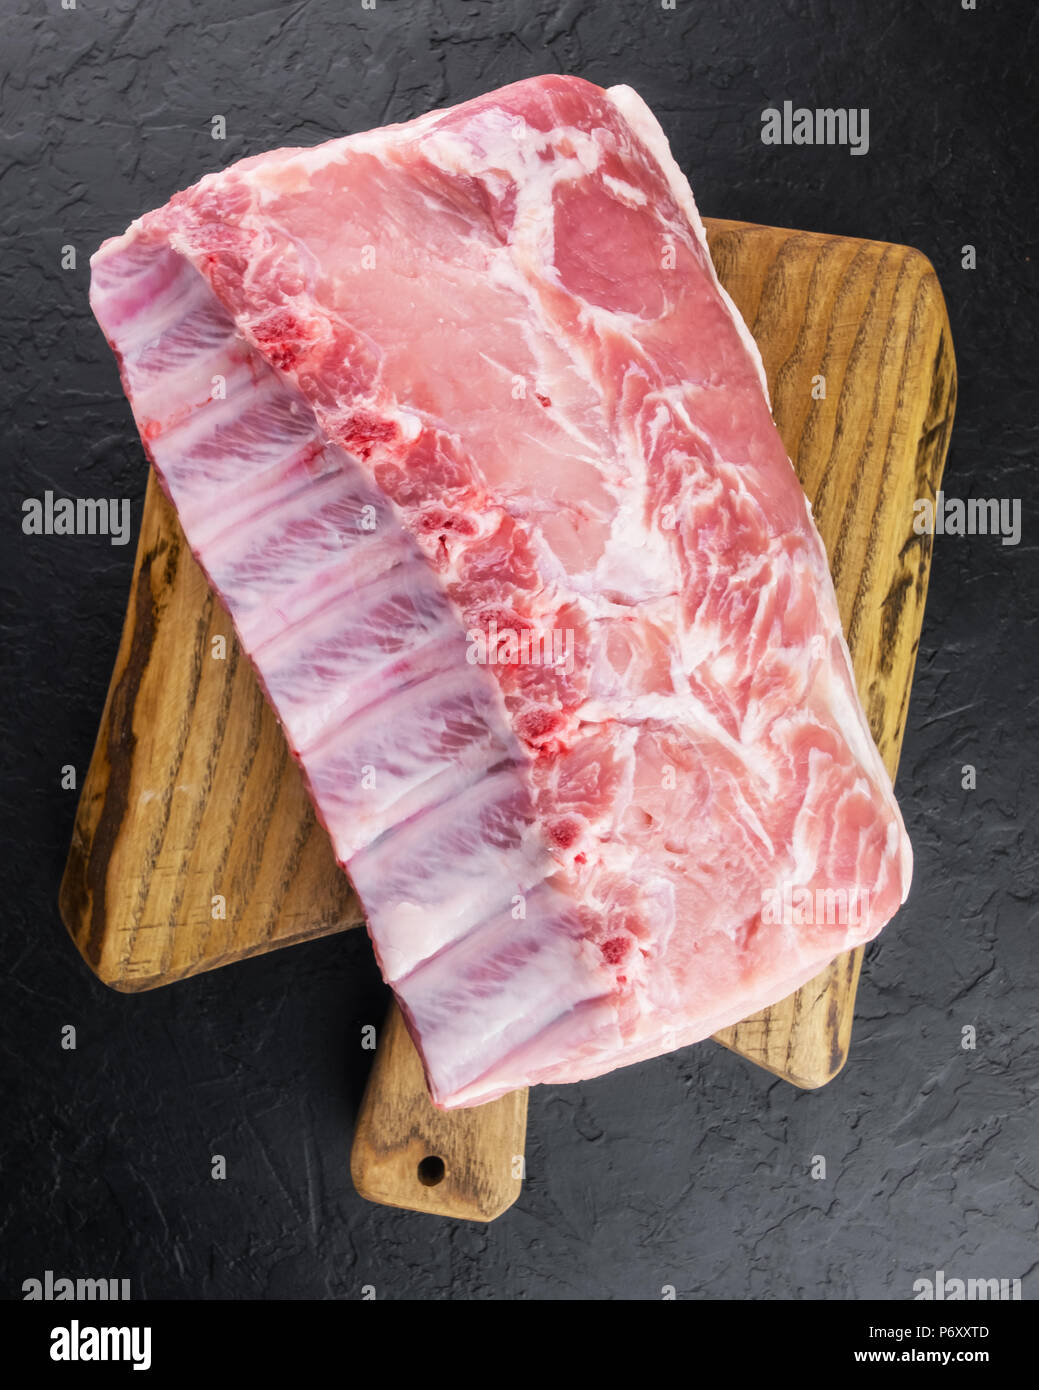 Fresh raw pork piece on wooden board Stock Photo